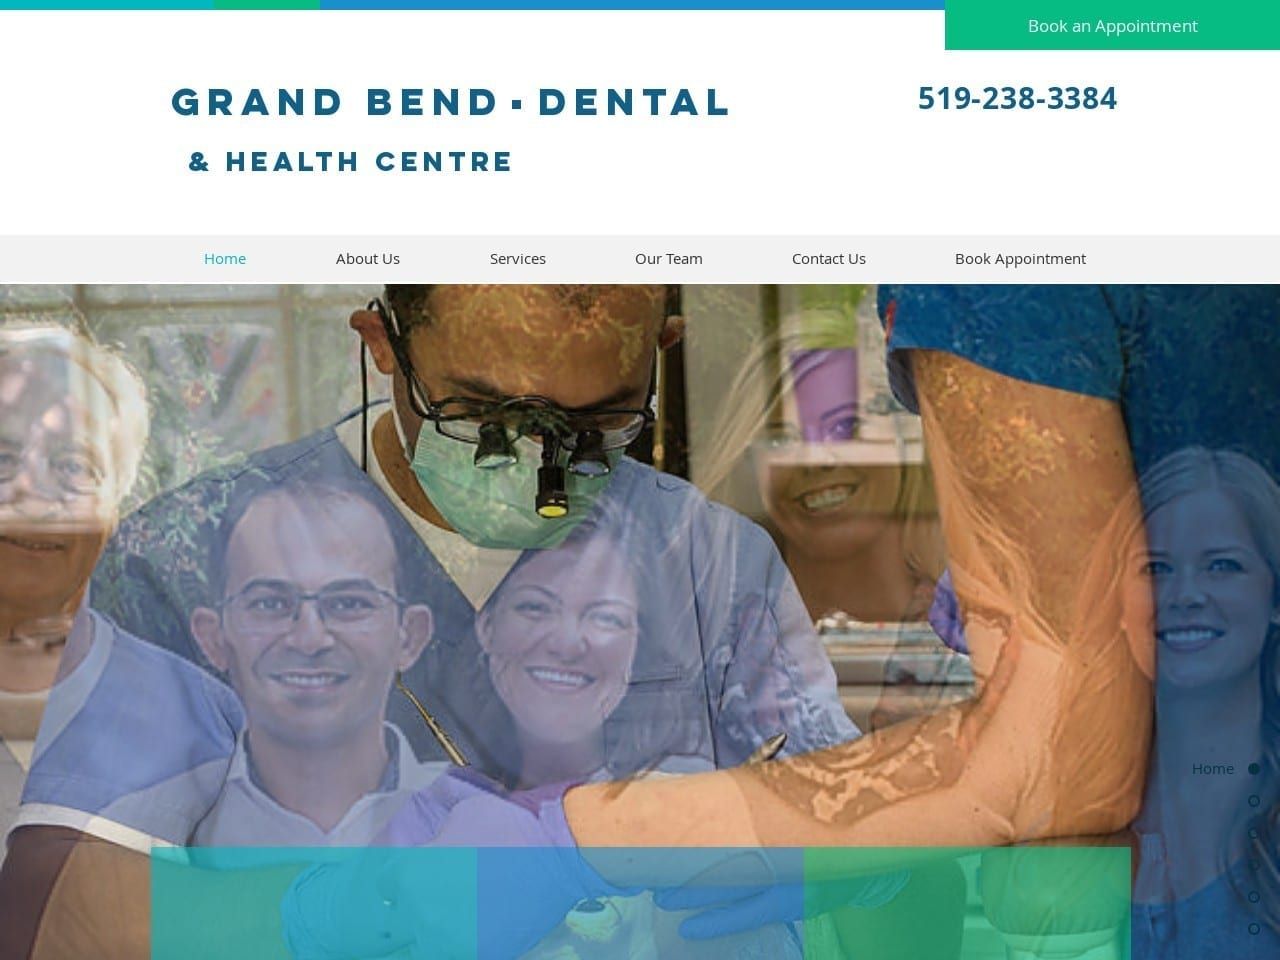 Gb Dental Health Website Screenshot from gbdentalhealth.com